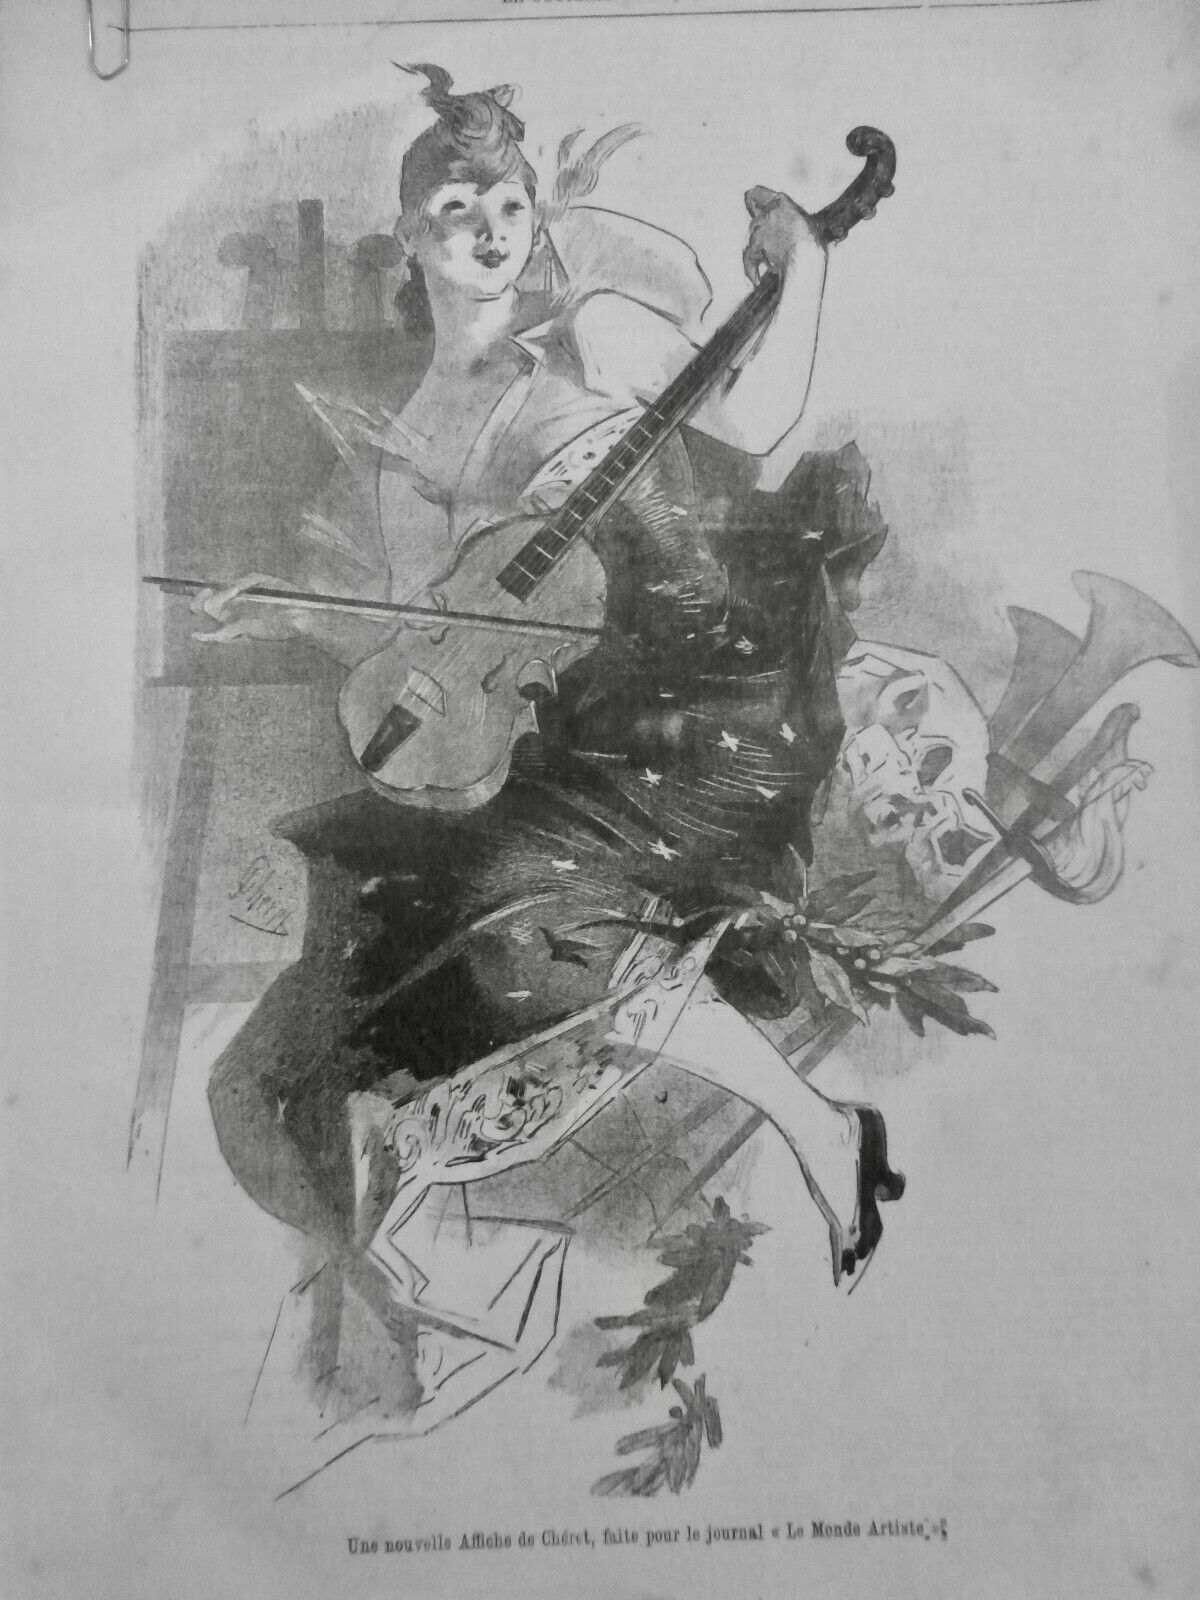 1892 Cf Poster Cheret World Artist Young Girl Instrument Violin